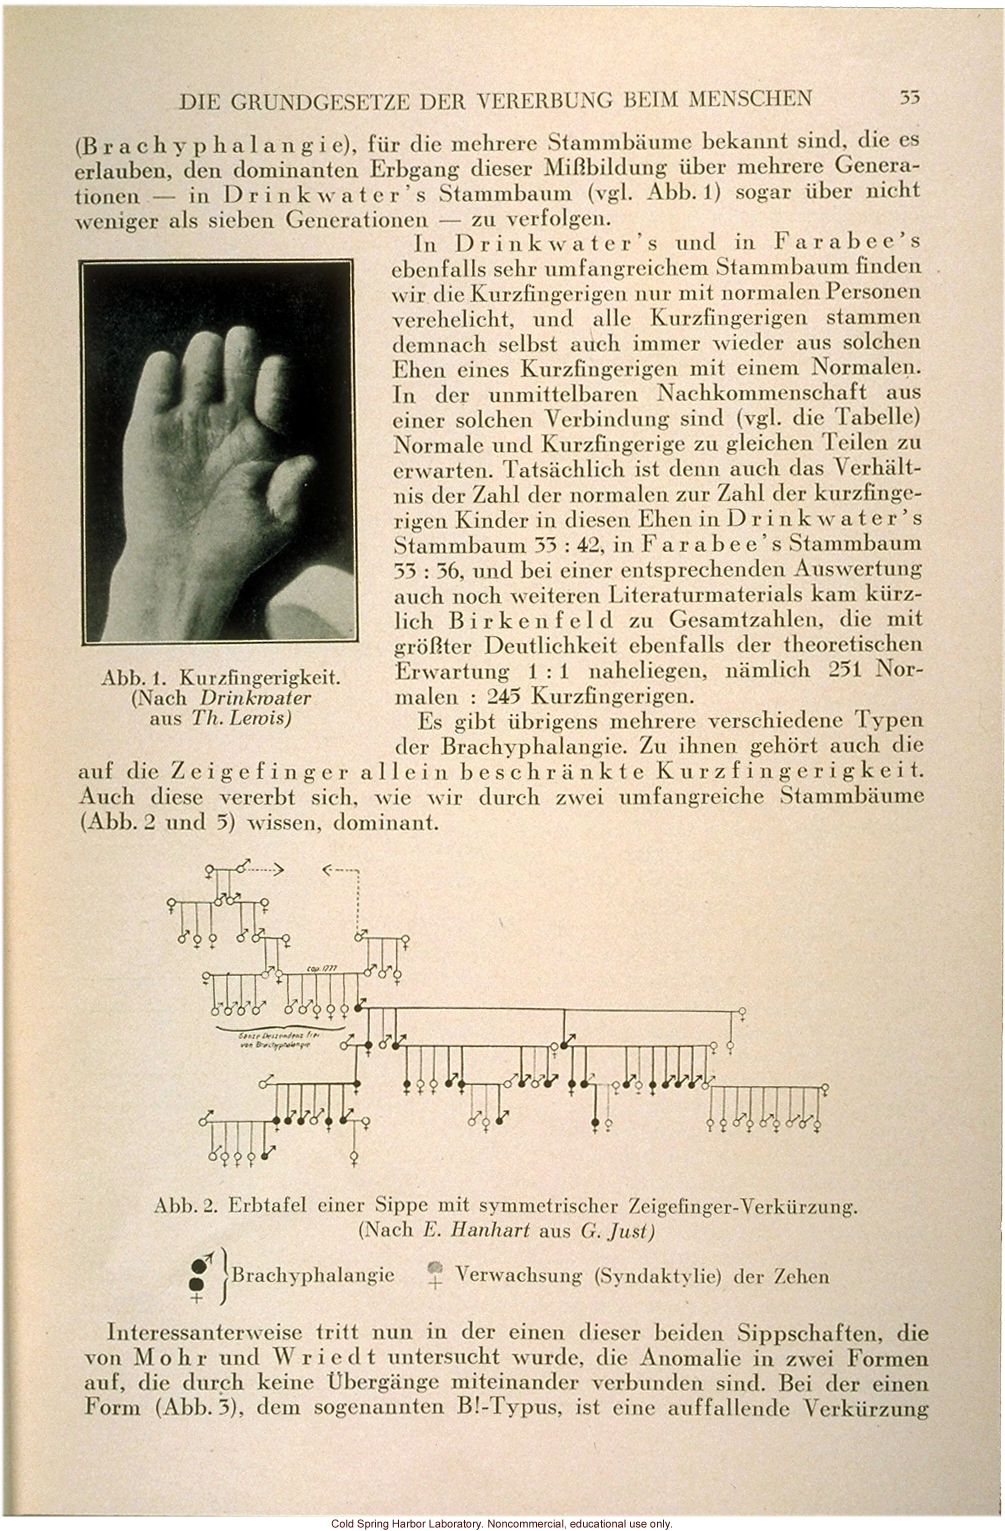 Eugenik: Erblehre, erbpflege (Eugenics: Hereditary teaching, preservation), October 1930